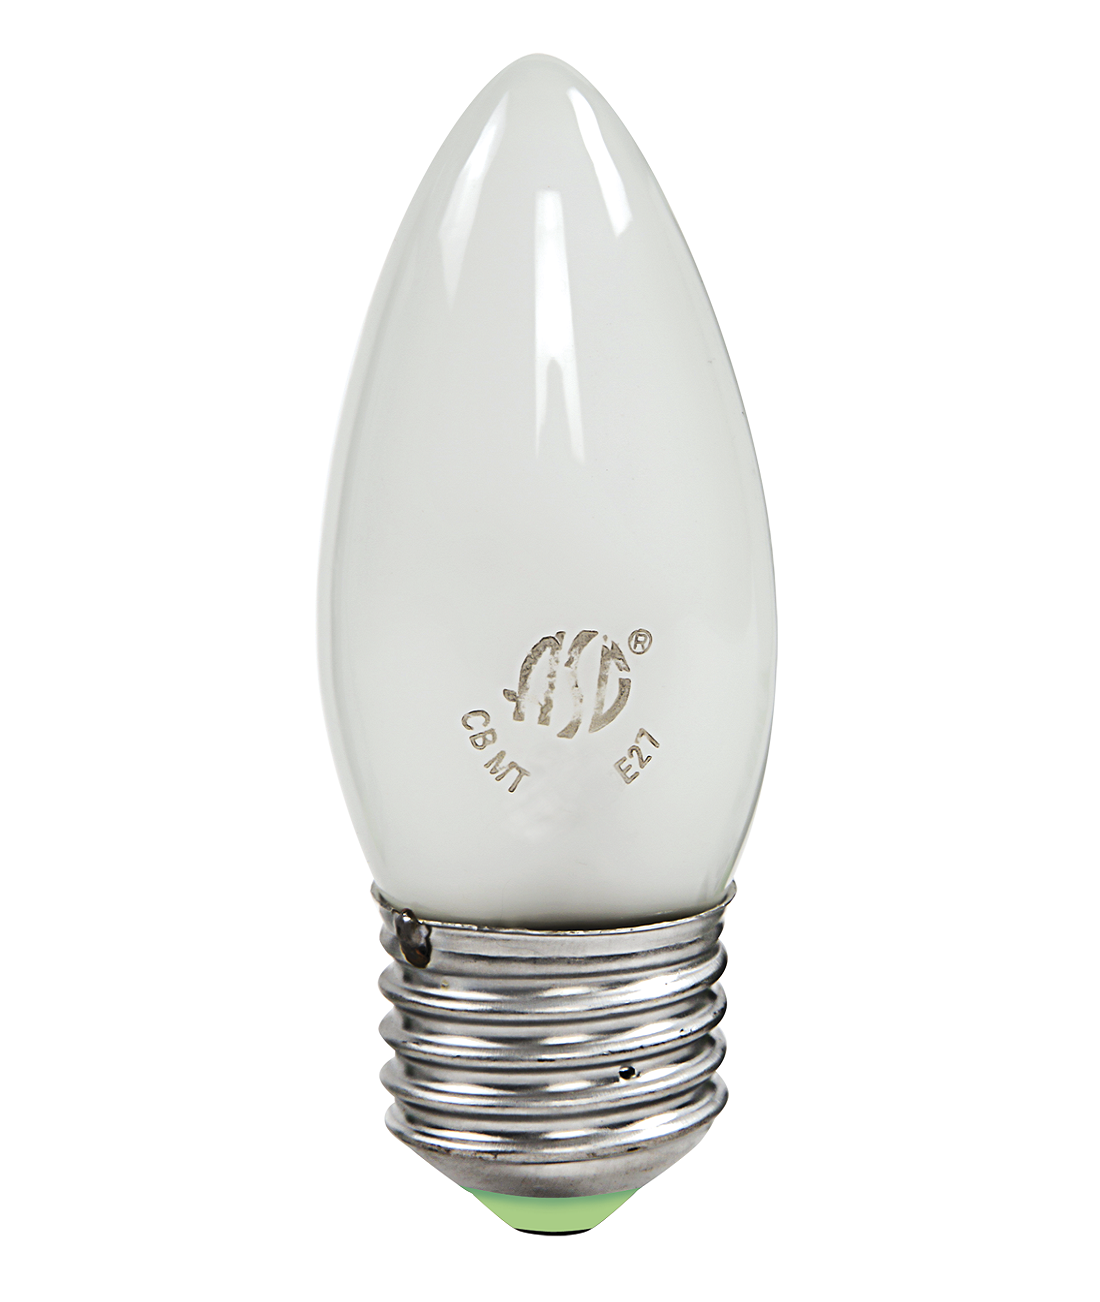 Купить лампа накаливания свеча b35 40вт 230в e27 матовая 380лм asd, 100% качество, в наличии на L-ed.ru